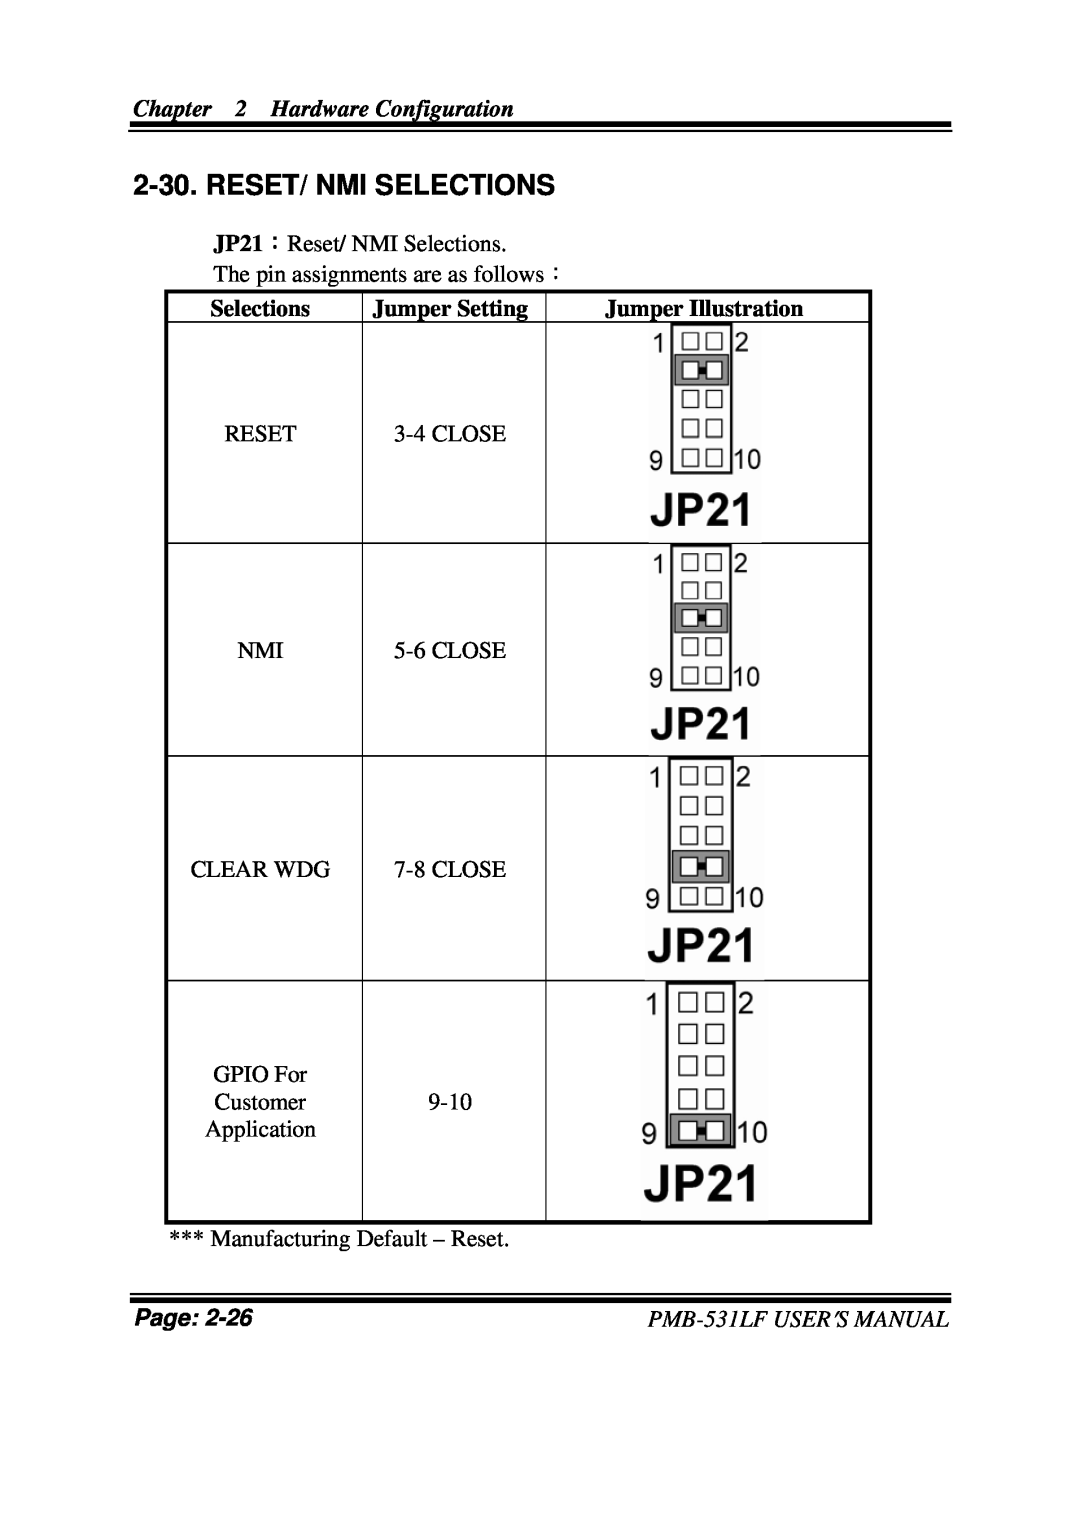 Intel PMB-531LF user manual Reset/ Nmi Selections, Jumper Illustration, Hardware Configuration, Jumper Setting, Page 